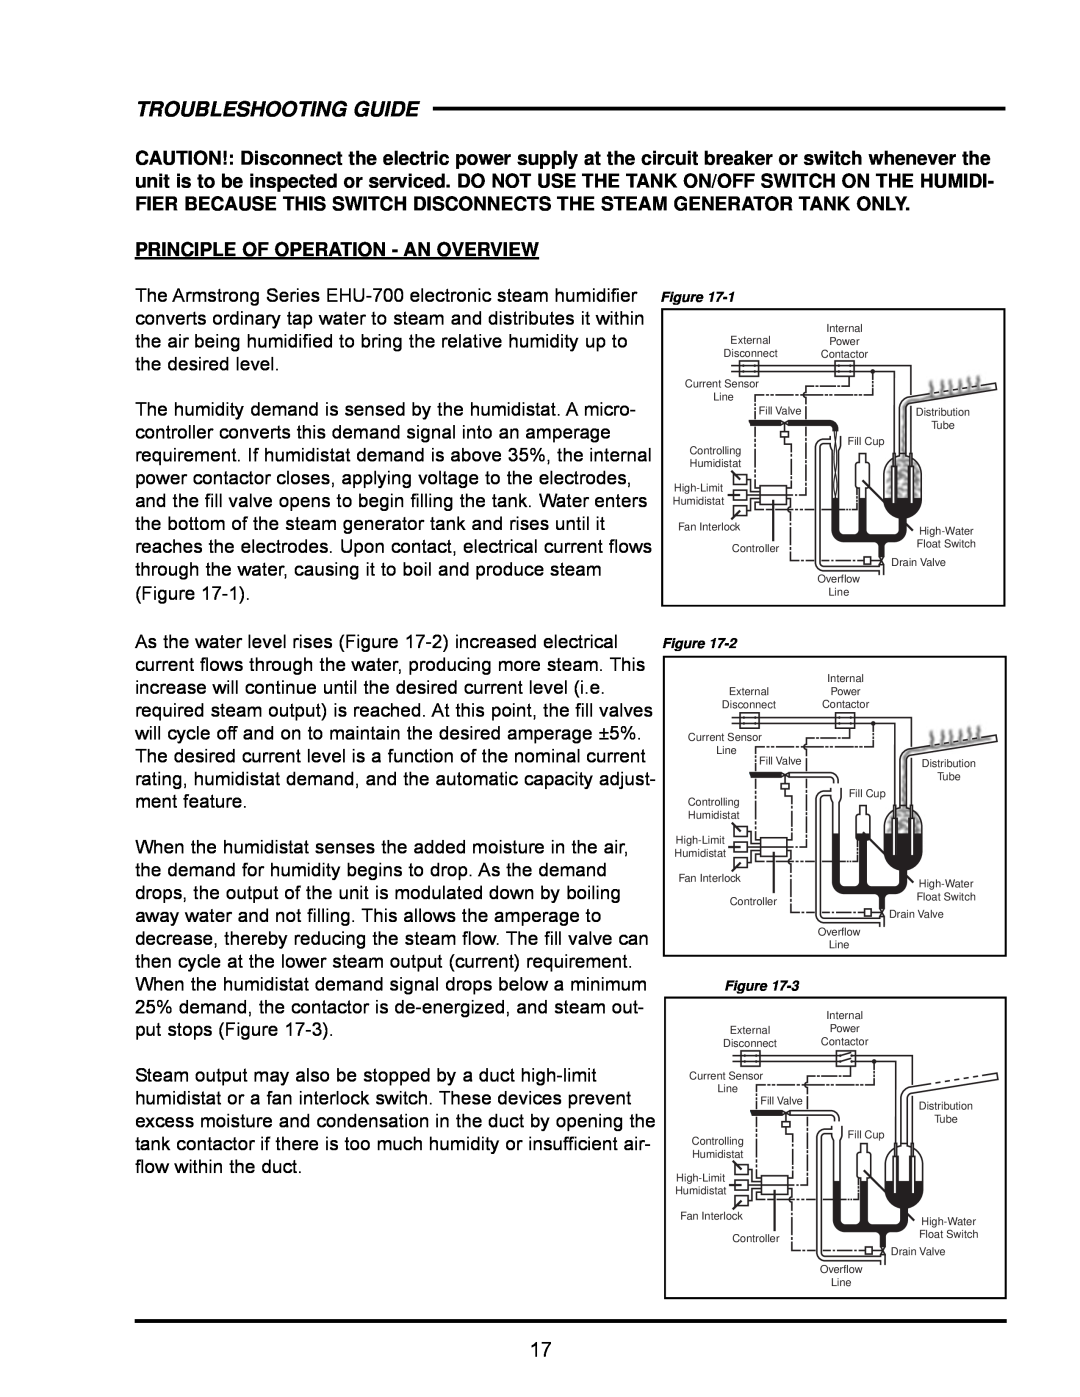 Armstrong World Industries EHU-703, EHU-700 Series, EHU-701 Troubleshooting Guide, Principle Of Operation - An Overview 